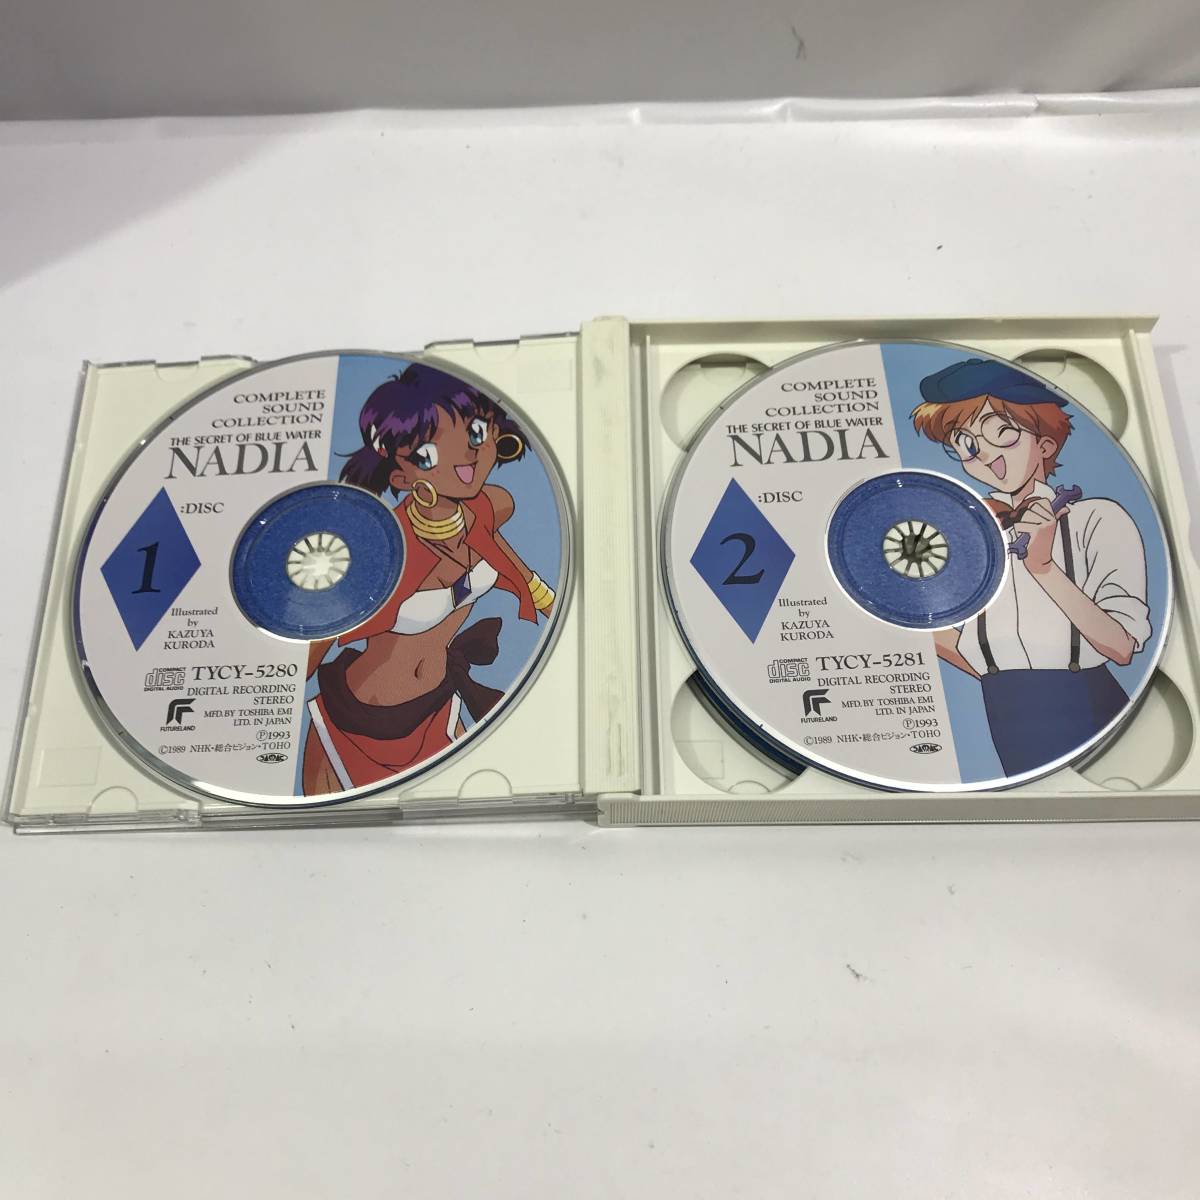 No.3116 [CD] Nadia, The Secret of Blue Water Complete звук коллекция CD11 листов комплект мозаика отсутствует коробка только б/у товар 